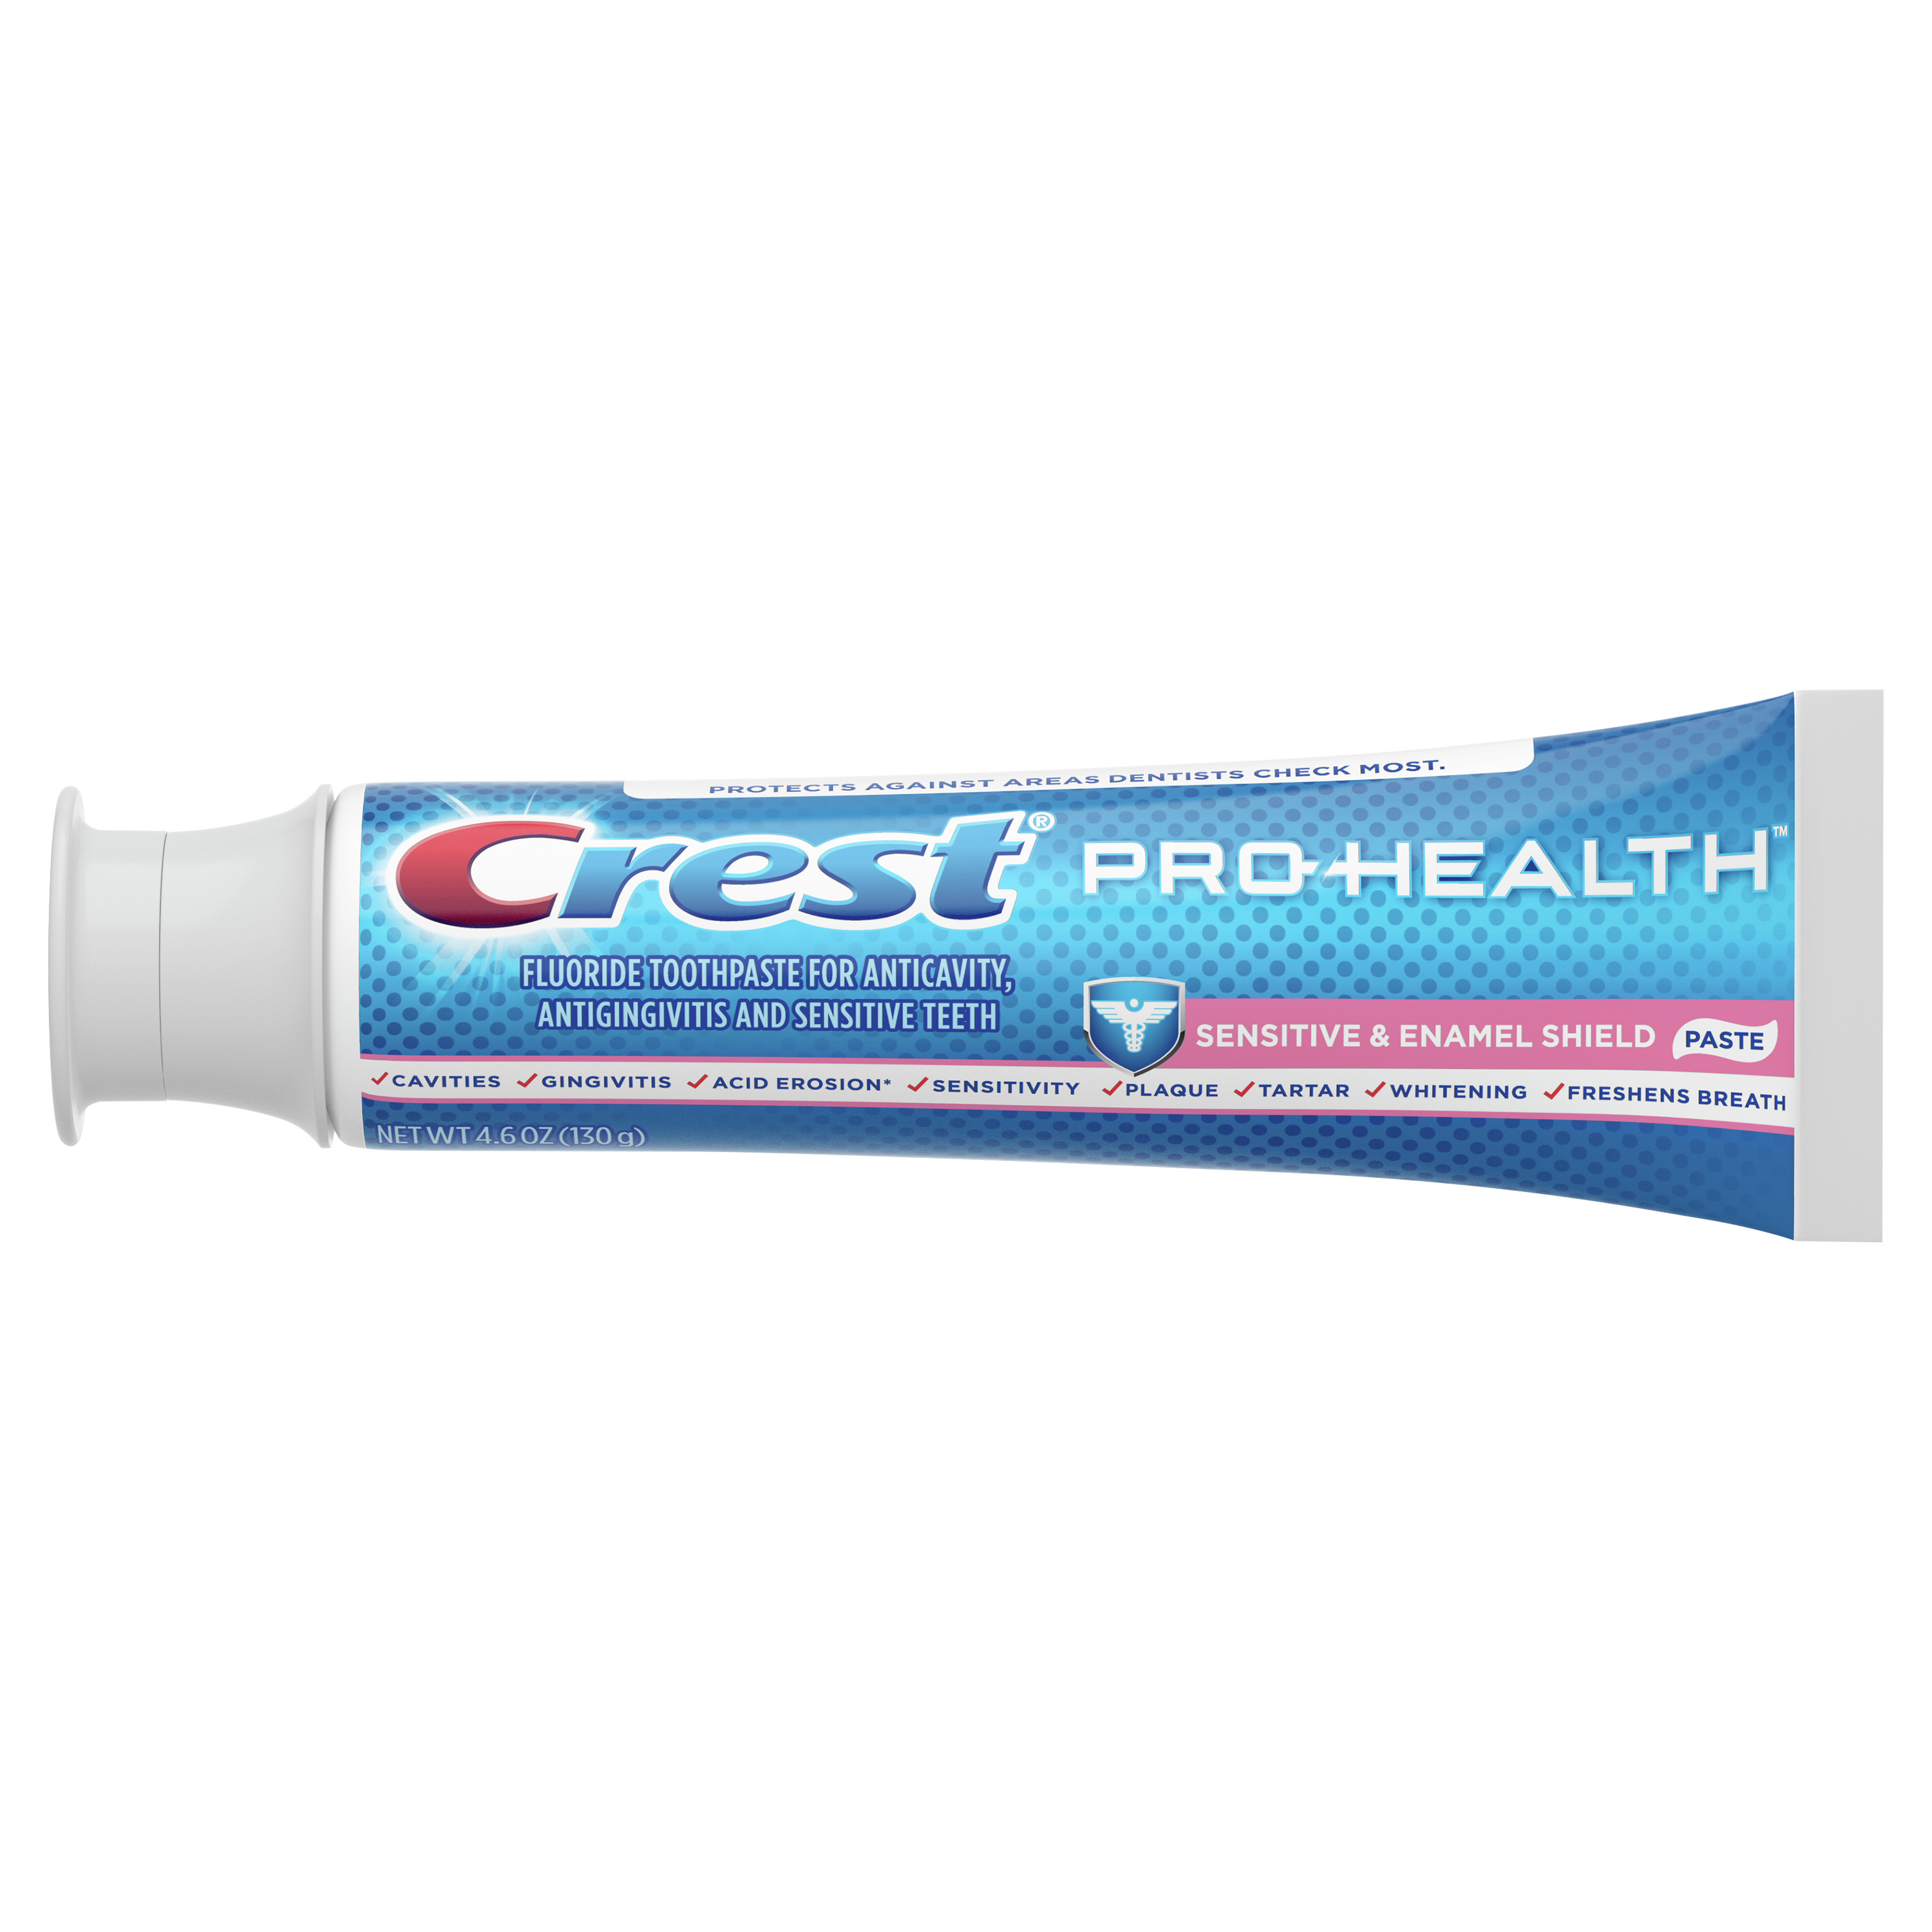 Crest Pro-Health Sensitive & Enamel Shield Toothpaste, 4.6 oz, Pack of 3 - image 3 of 7